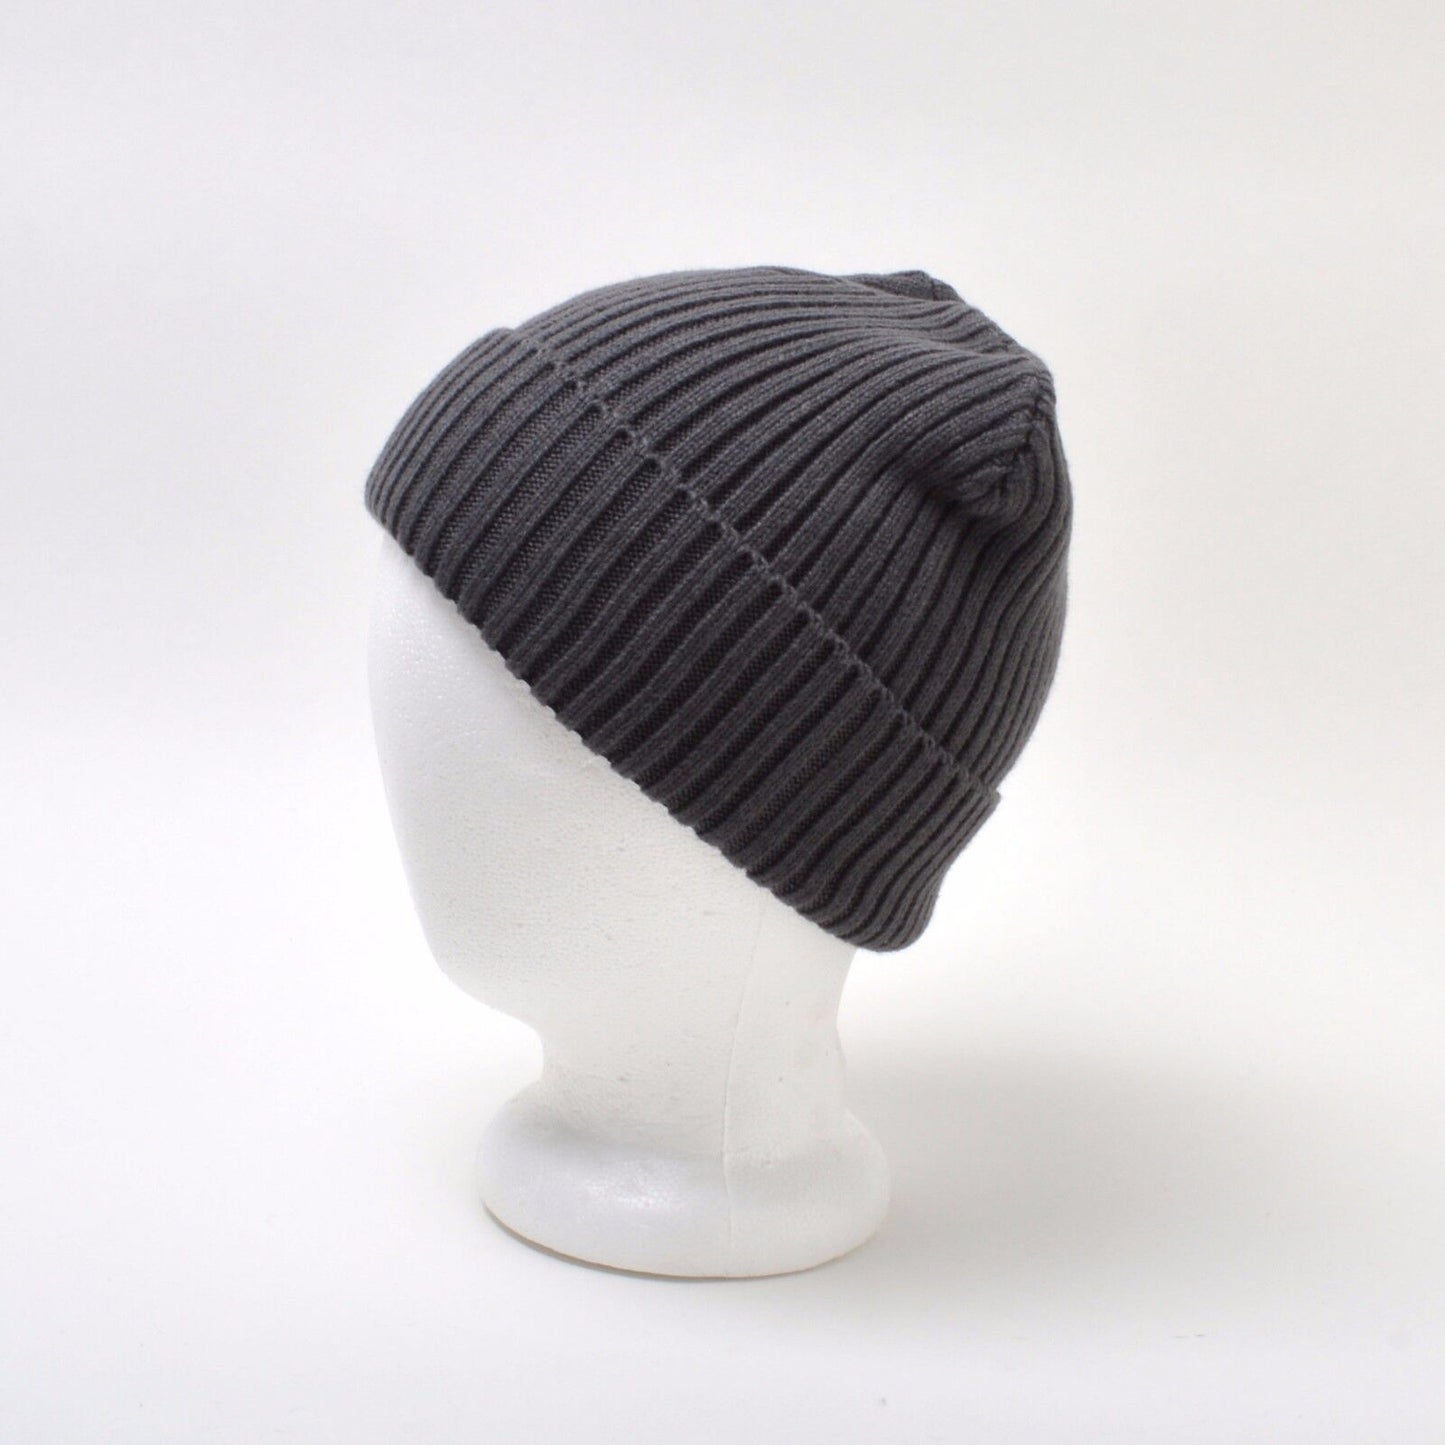 New Men Women Beanie Cap Hat Plain Knit Skull Cap Cuff Warm Winter Blank Ski Hat